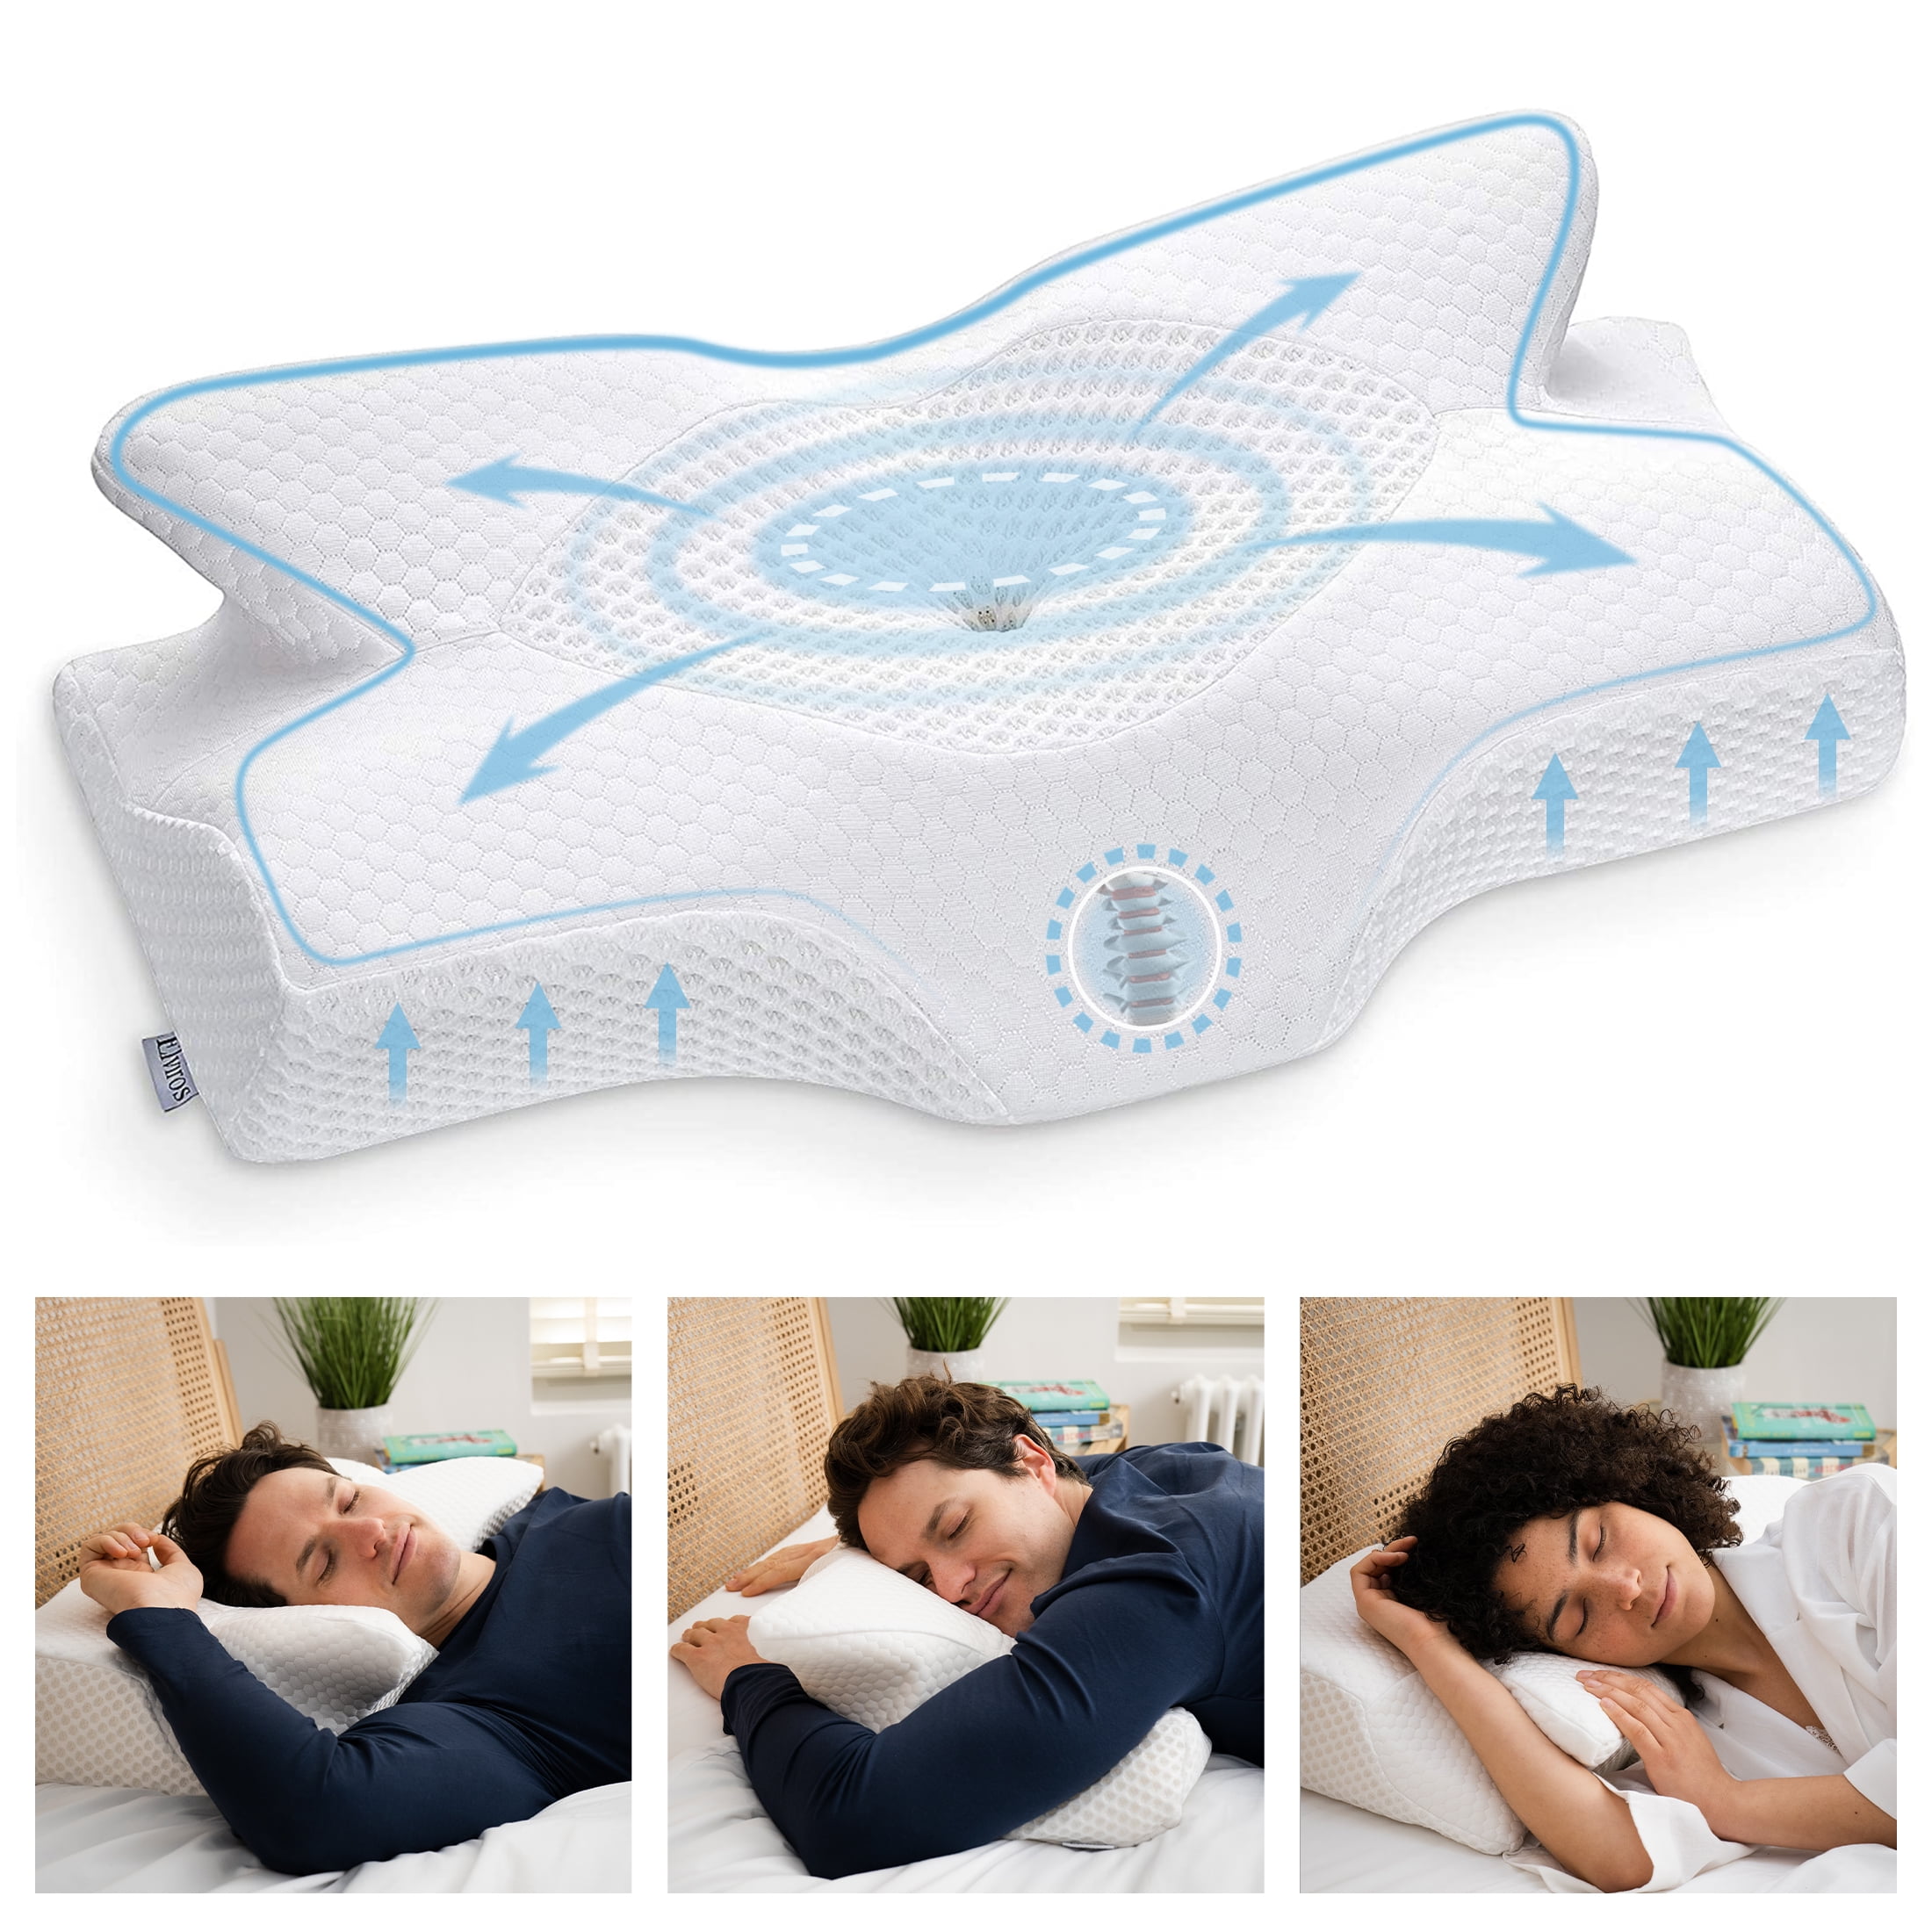 Carib Palm Memory Foam Pillows, Ergonomic Pillow, Neck Support Pillows for Sleeping, Pillow for Neck and Shoulder Pain, Pillow for Neck Pain Relief